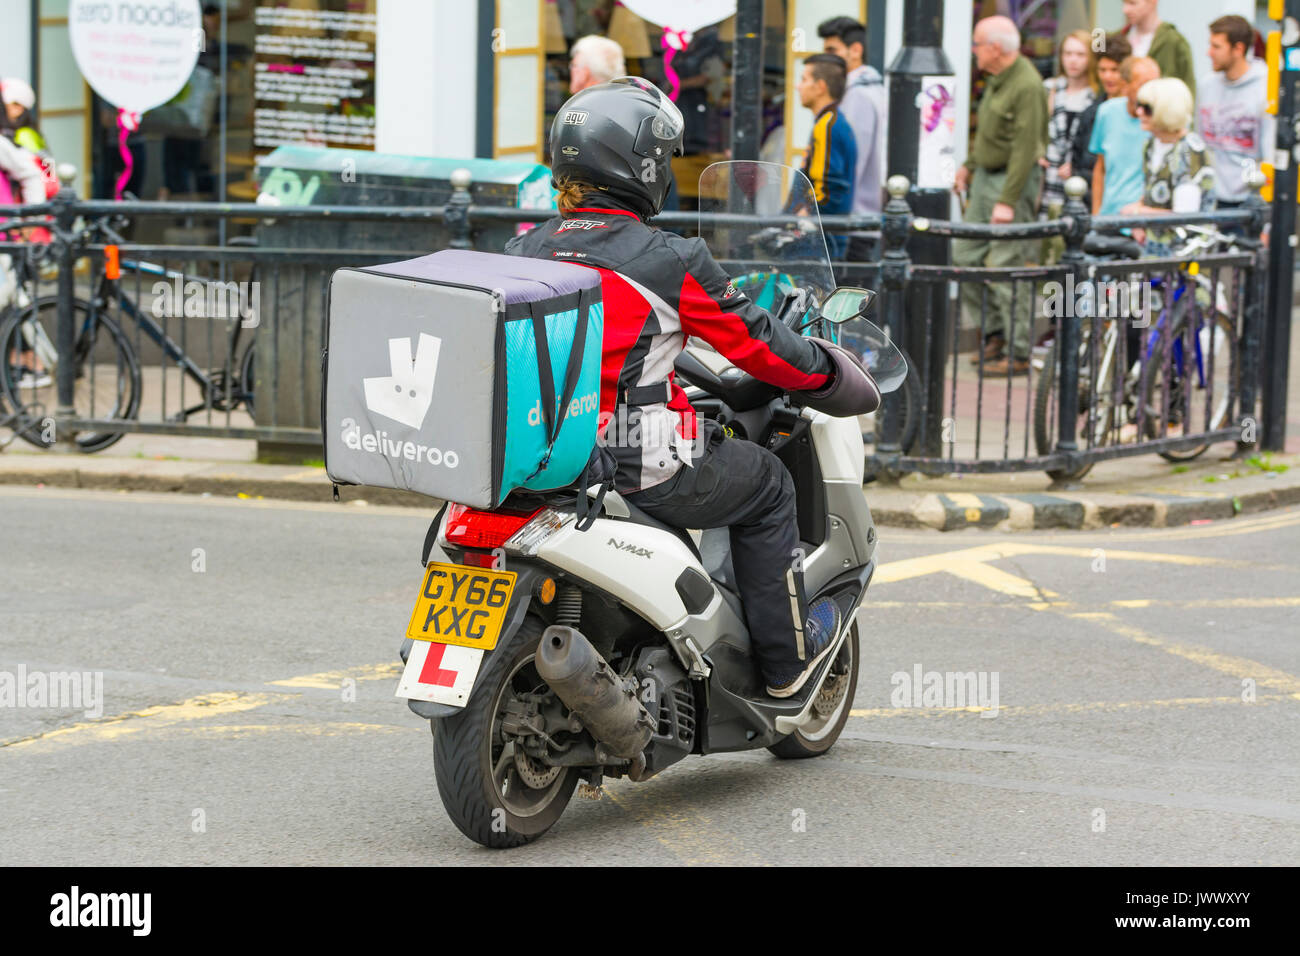 Deliveroo. Deliveroo deliveries motorcyclist in Brighton, East Sussex, England, UK. Stock Photo